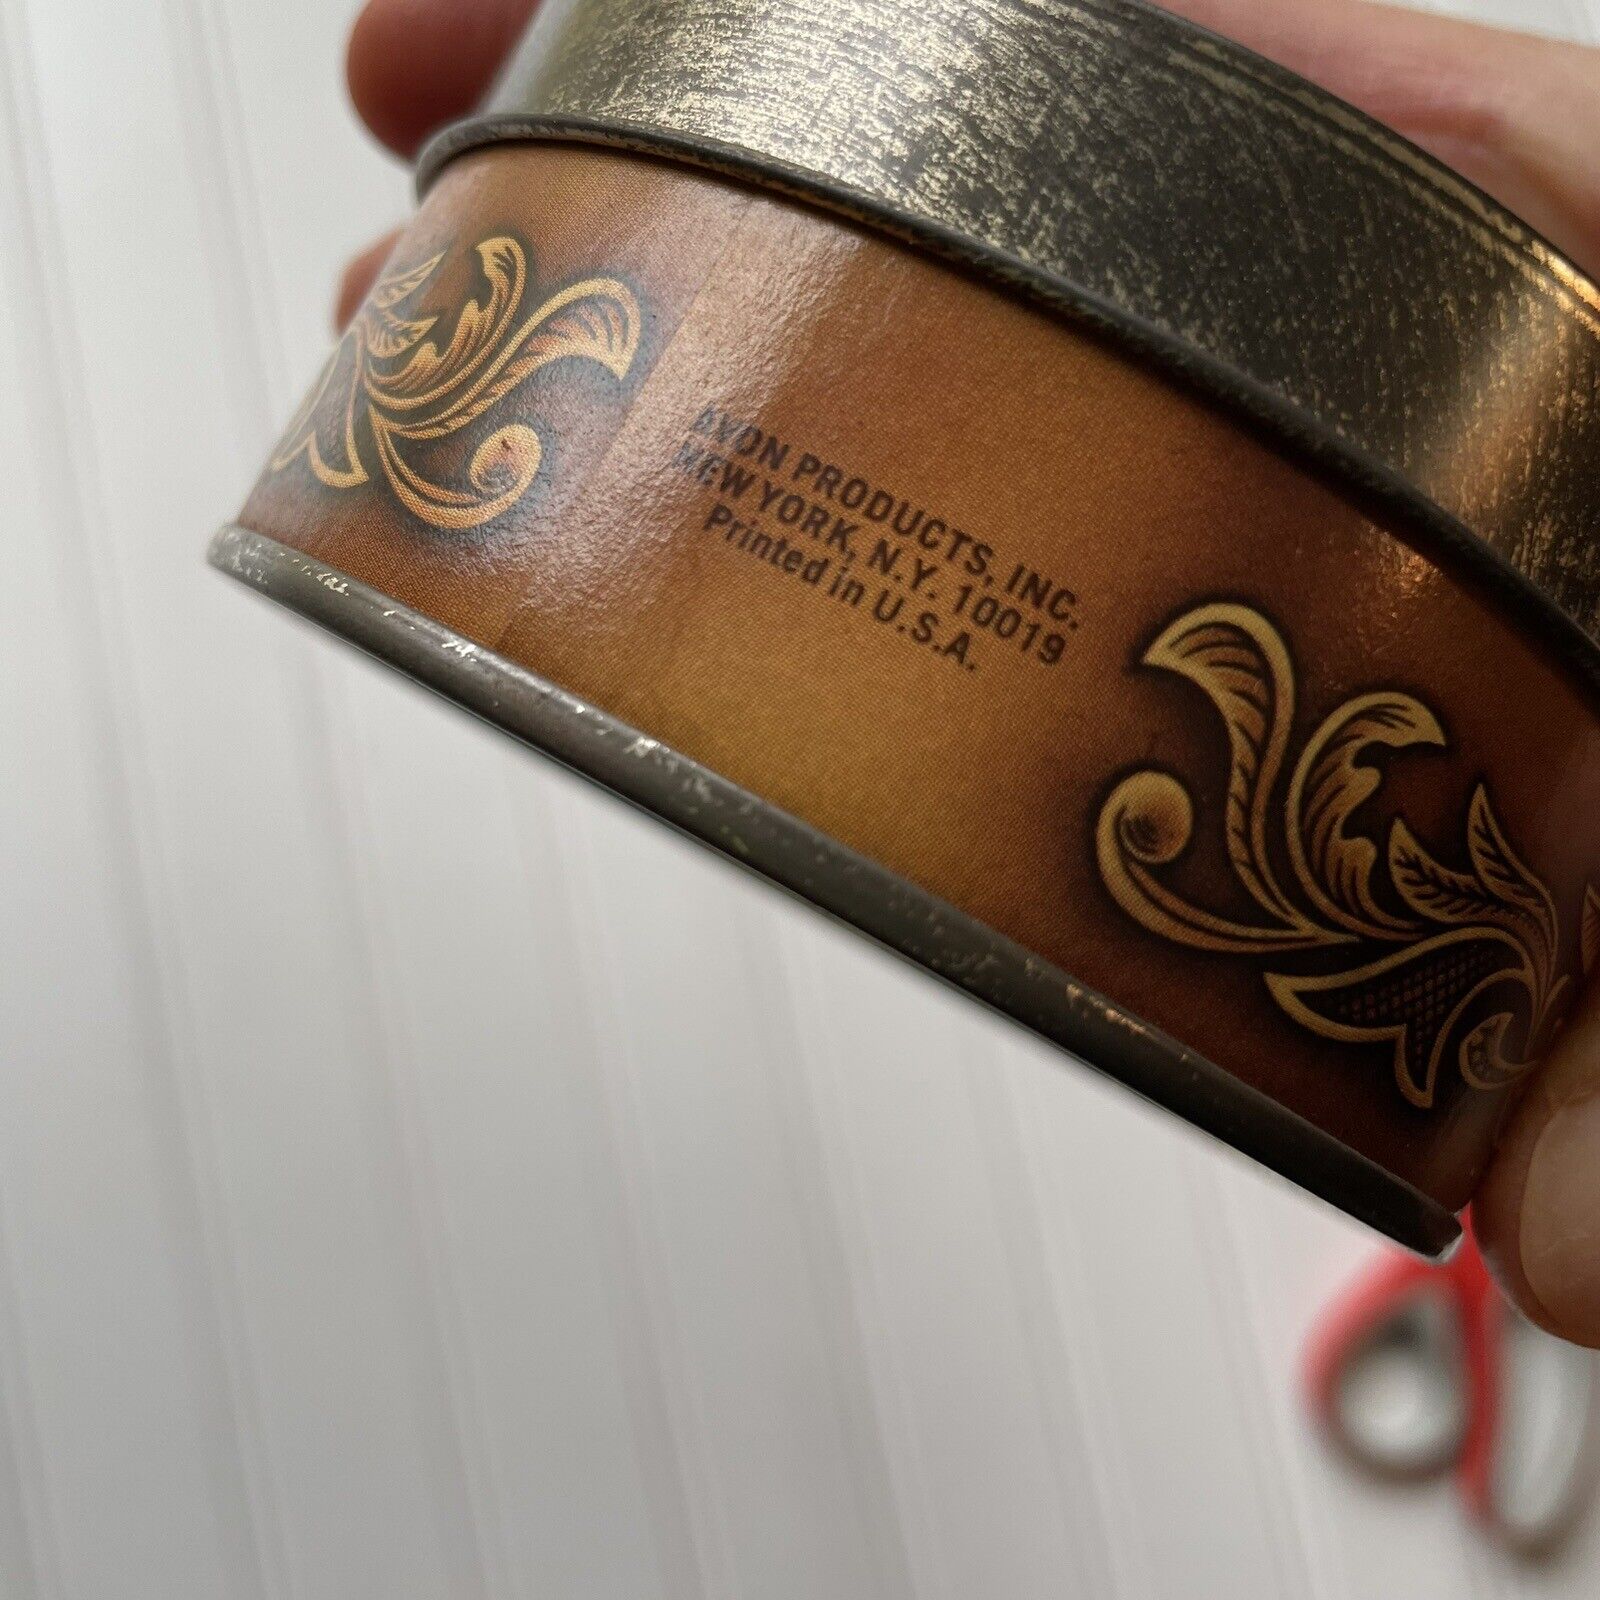 Vintage Avon Wild Country Gift Soap Trinket Tin Box Fragrance Man Cave Decor Без бренда - фотография #18